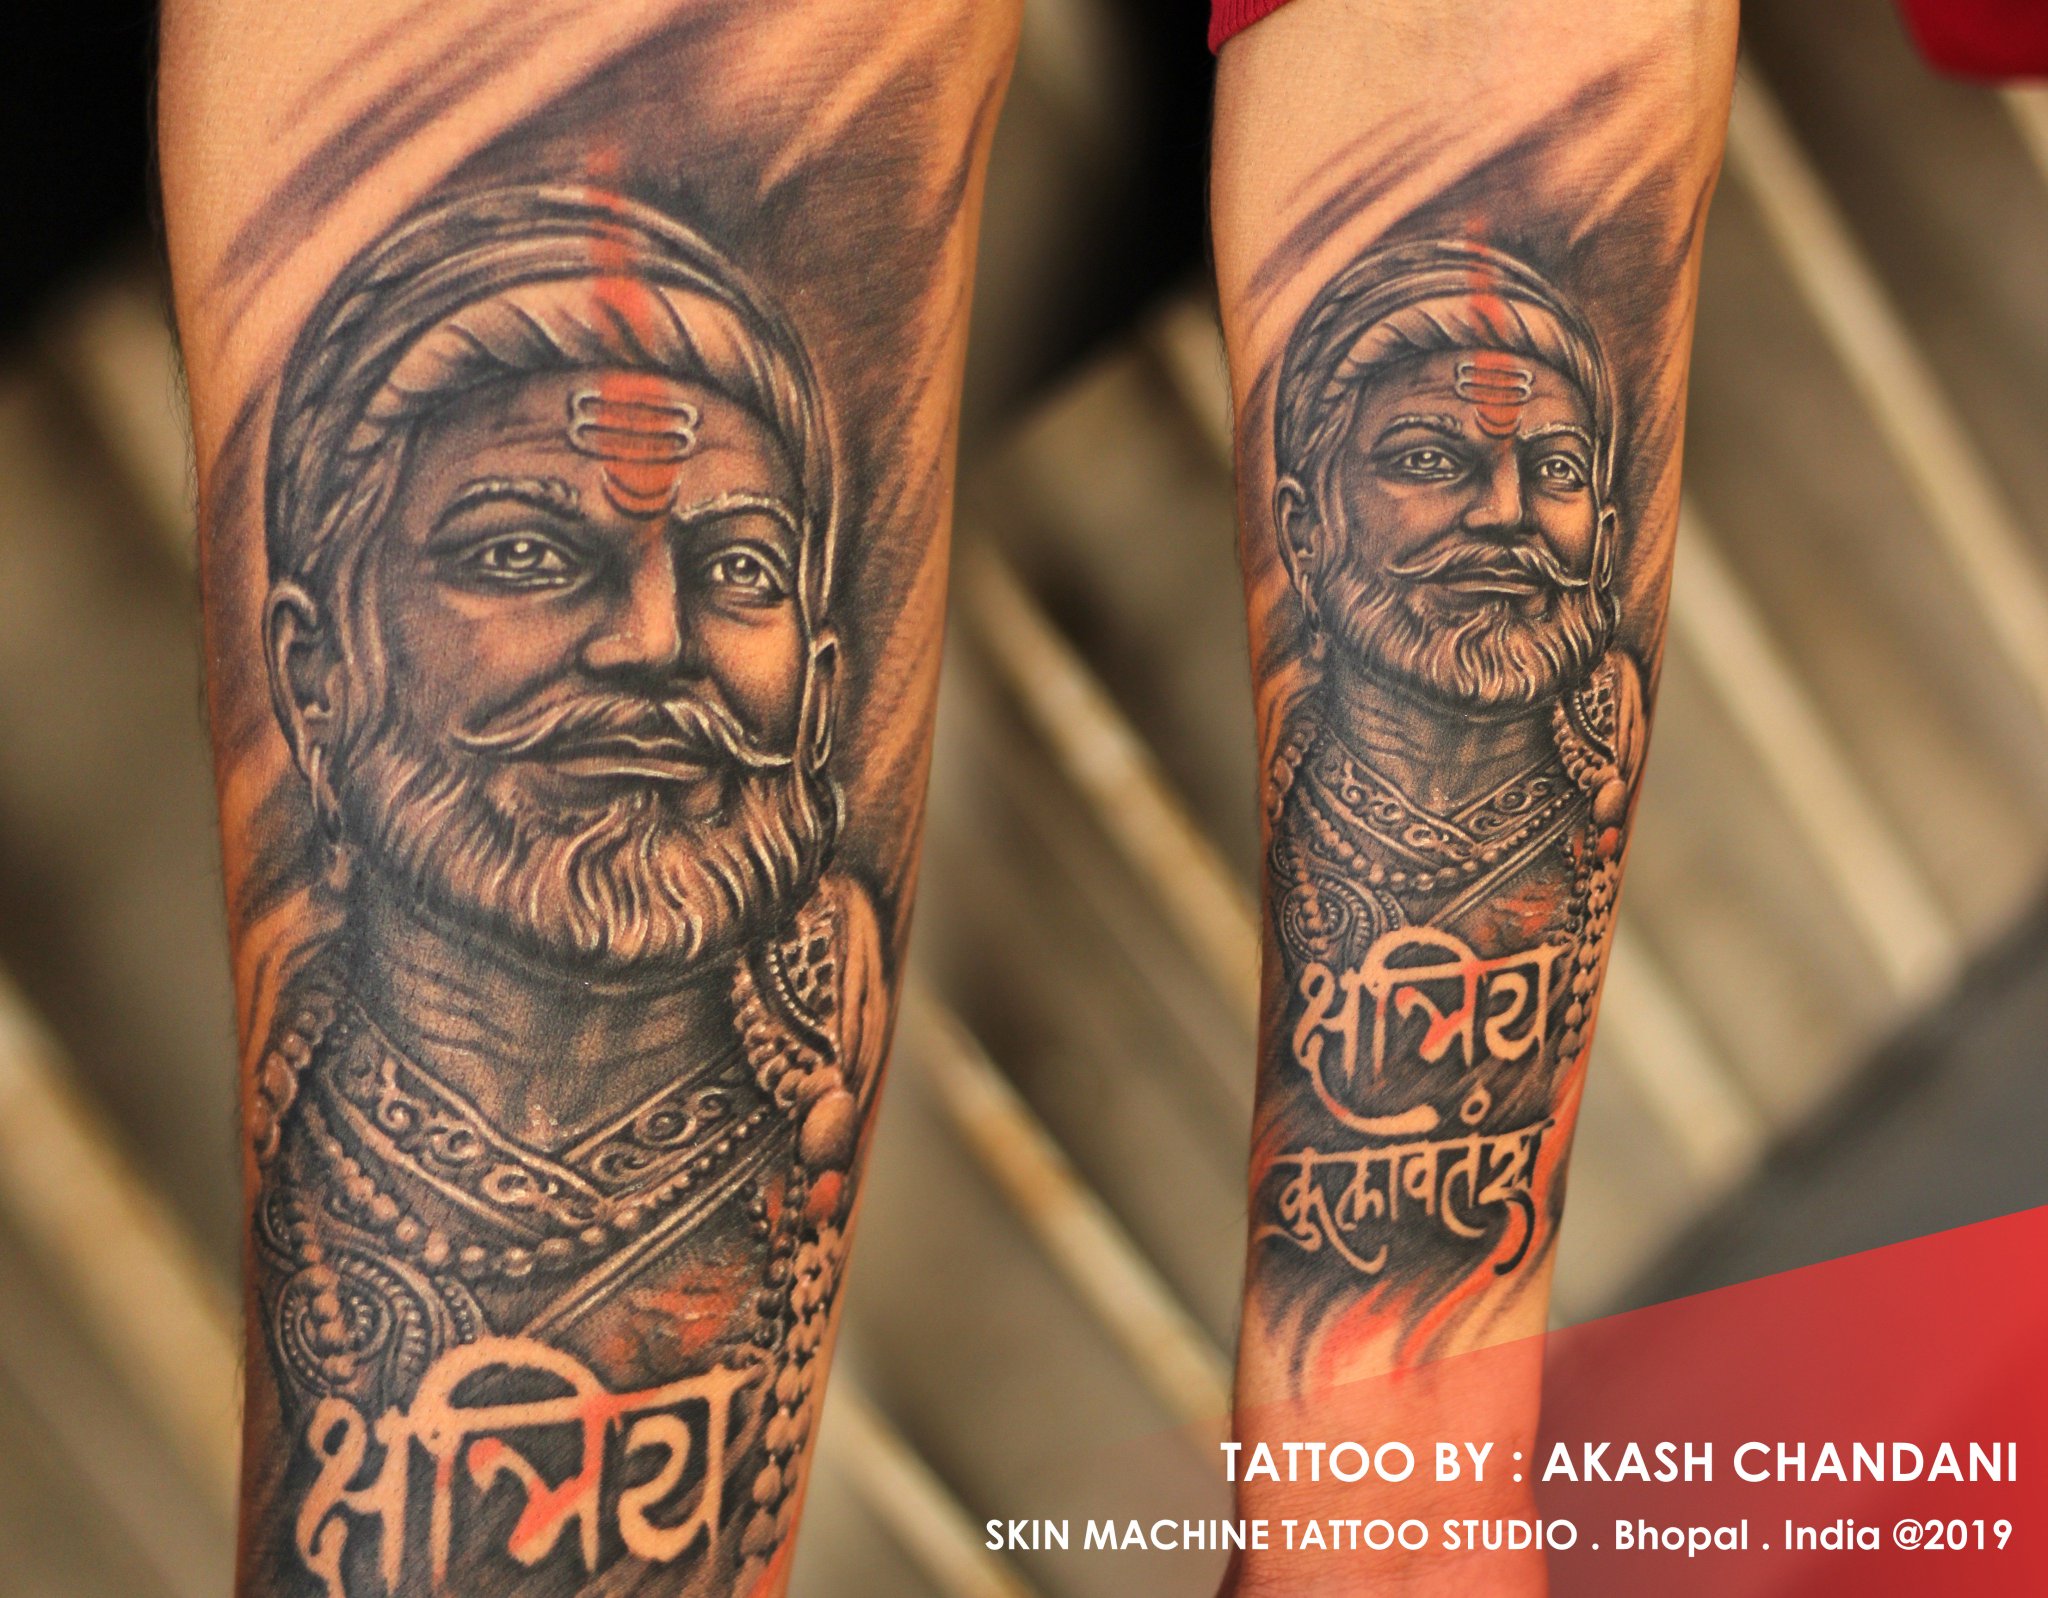 New one from series  Lord Shiva Tattoo by  Akash Chandani Would  appreciate feedback  Skin Machine Tattoo Stu  Shiva tattoo design  Ganesha tattoo Kali tattoo